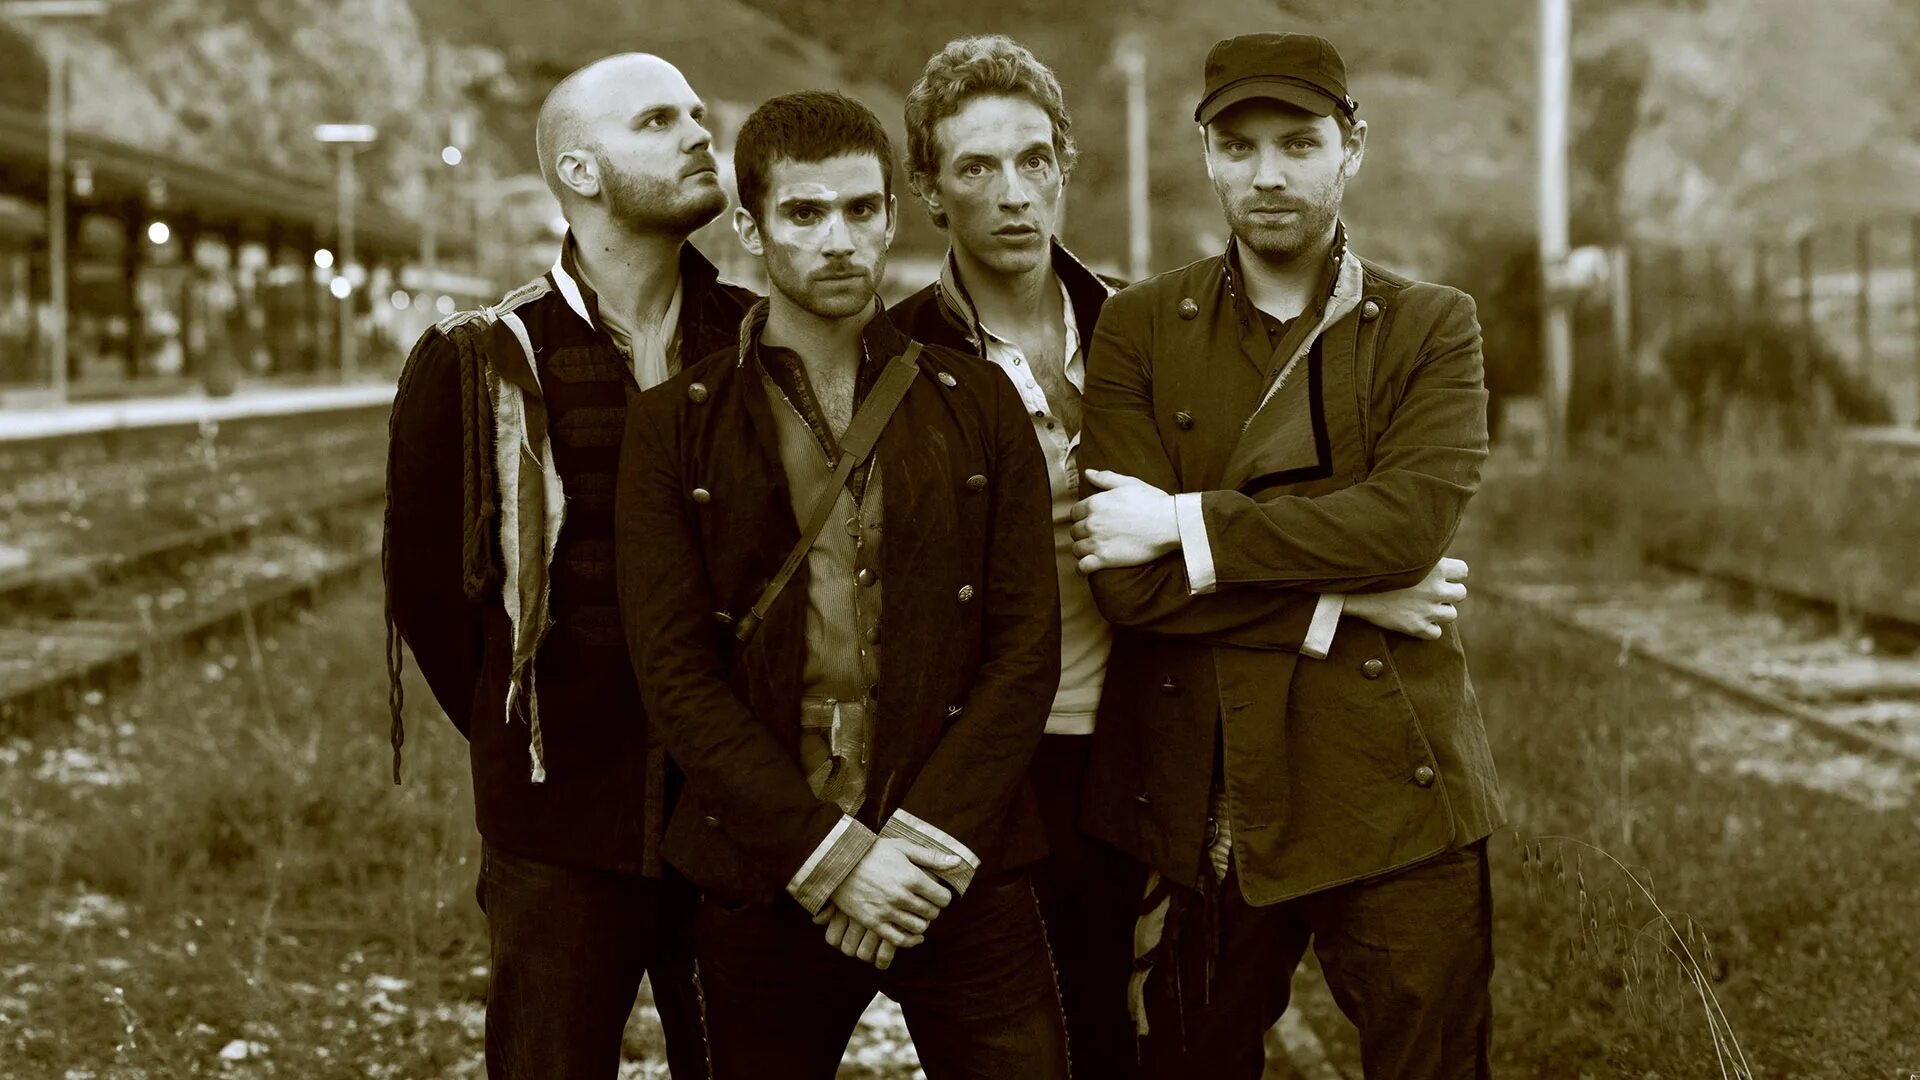 Группа джентльмены. Coldplay. Группа колдплей. Coldplay 2000. Состав группы колдплей.